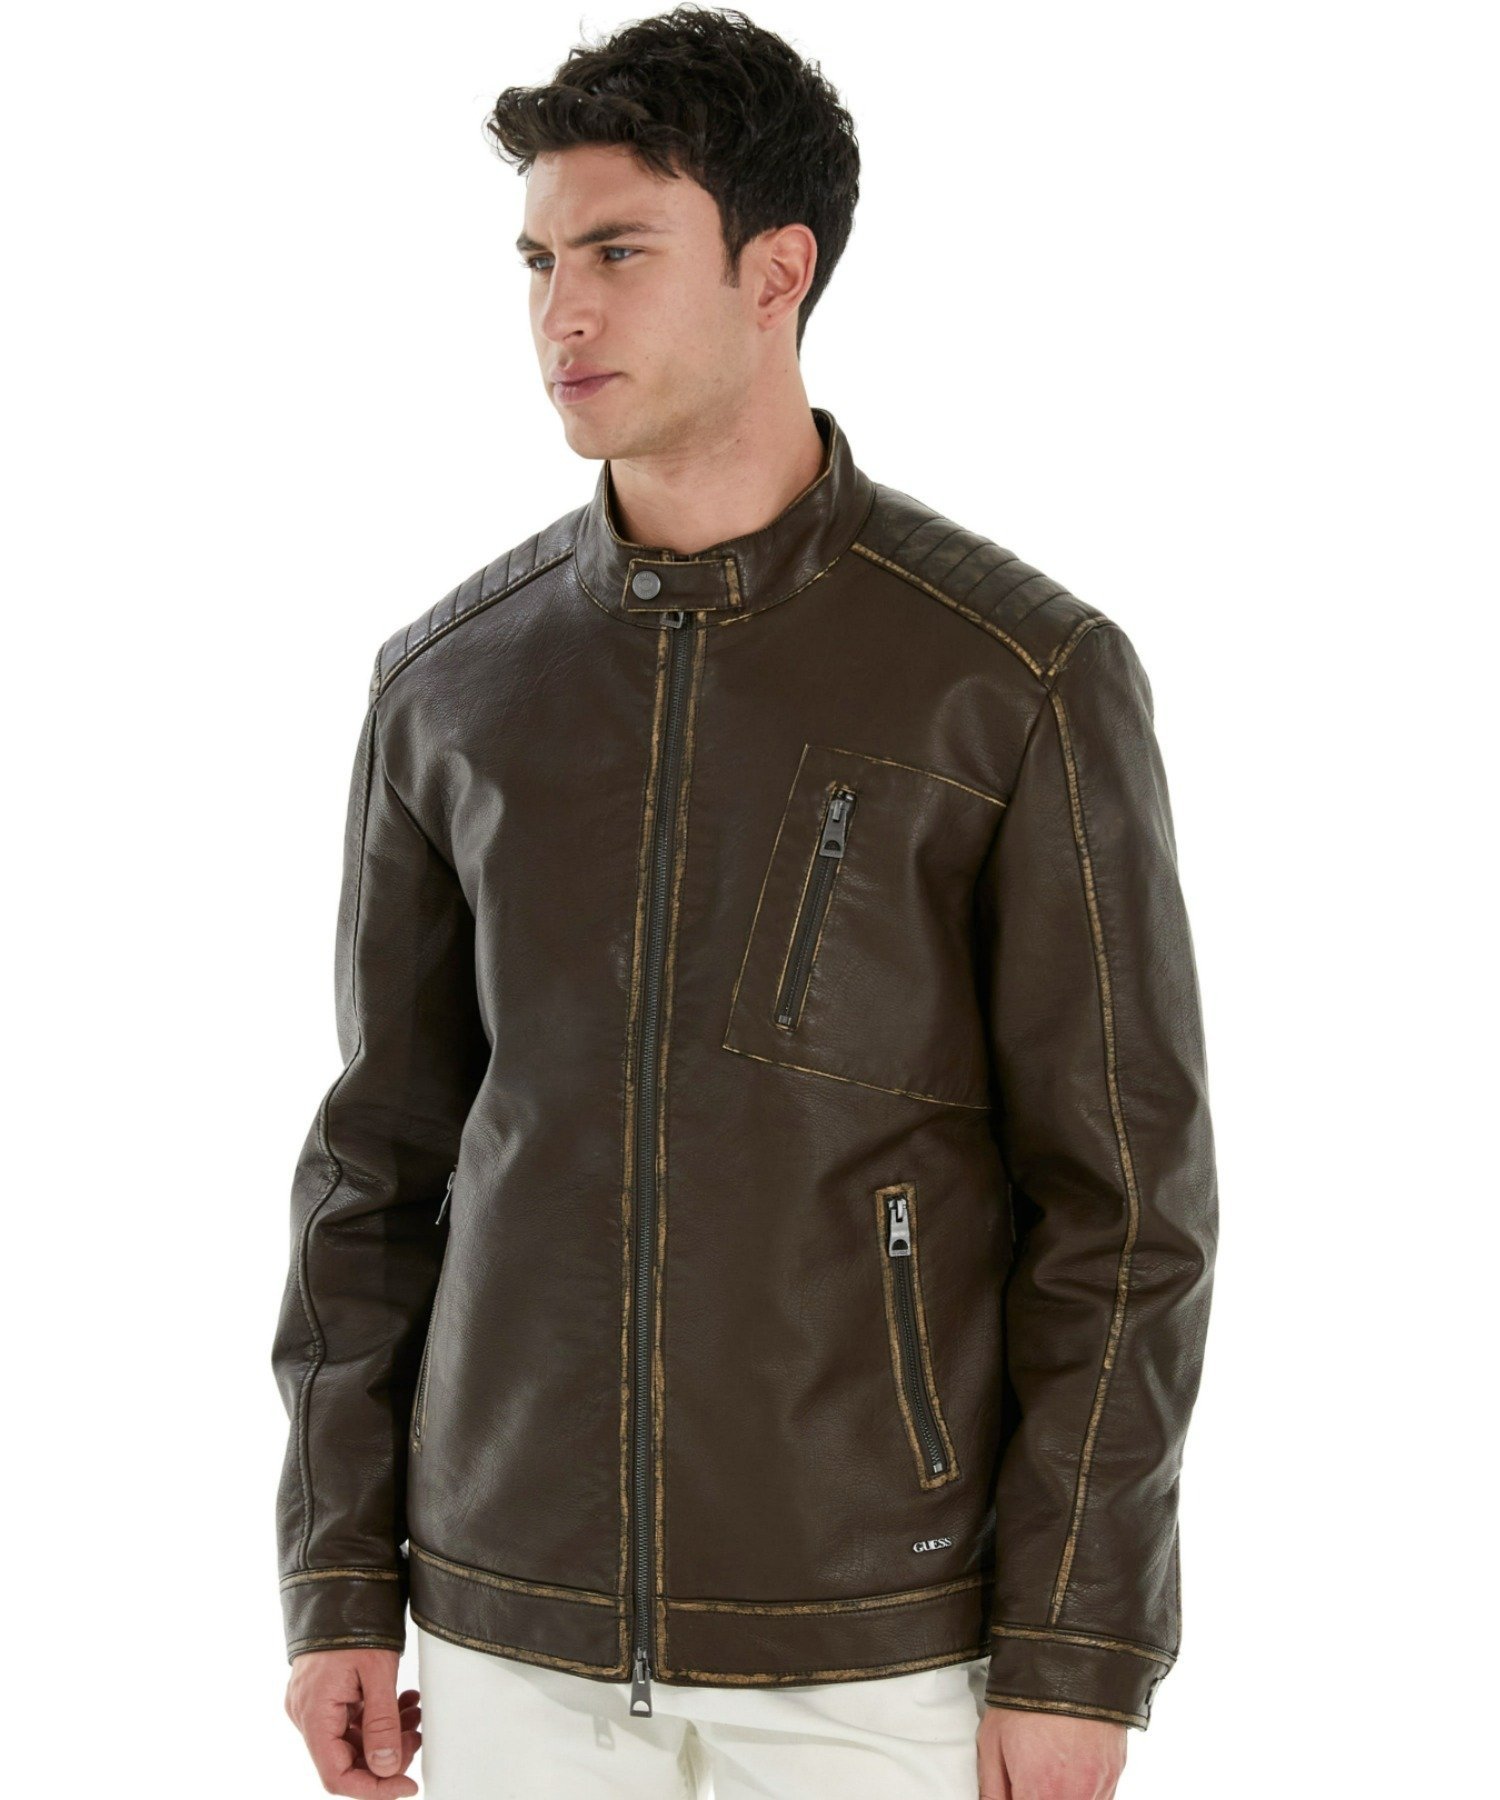 GUESS GUESS ジャケット (M)Pu Leather Washed Jacket ゲス ジャケット・アウター ライダースジャケット ブラウン ブラック